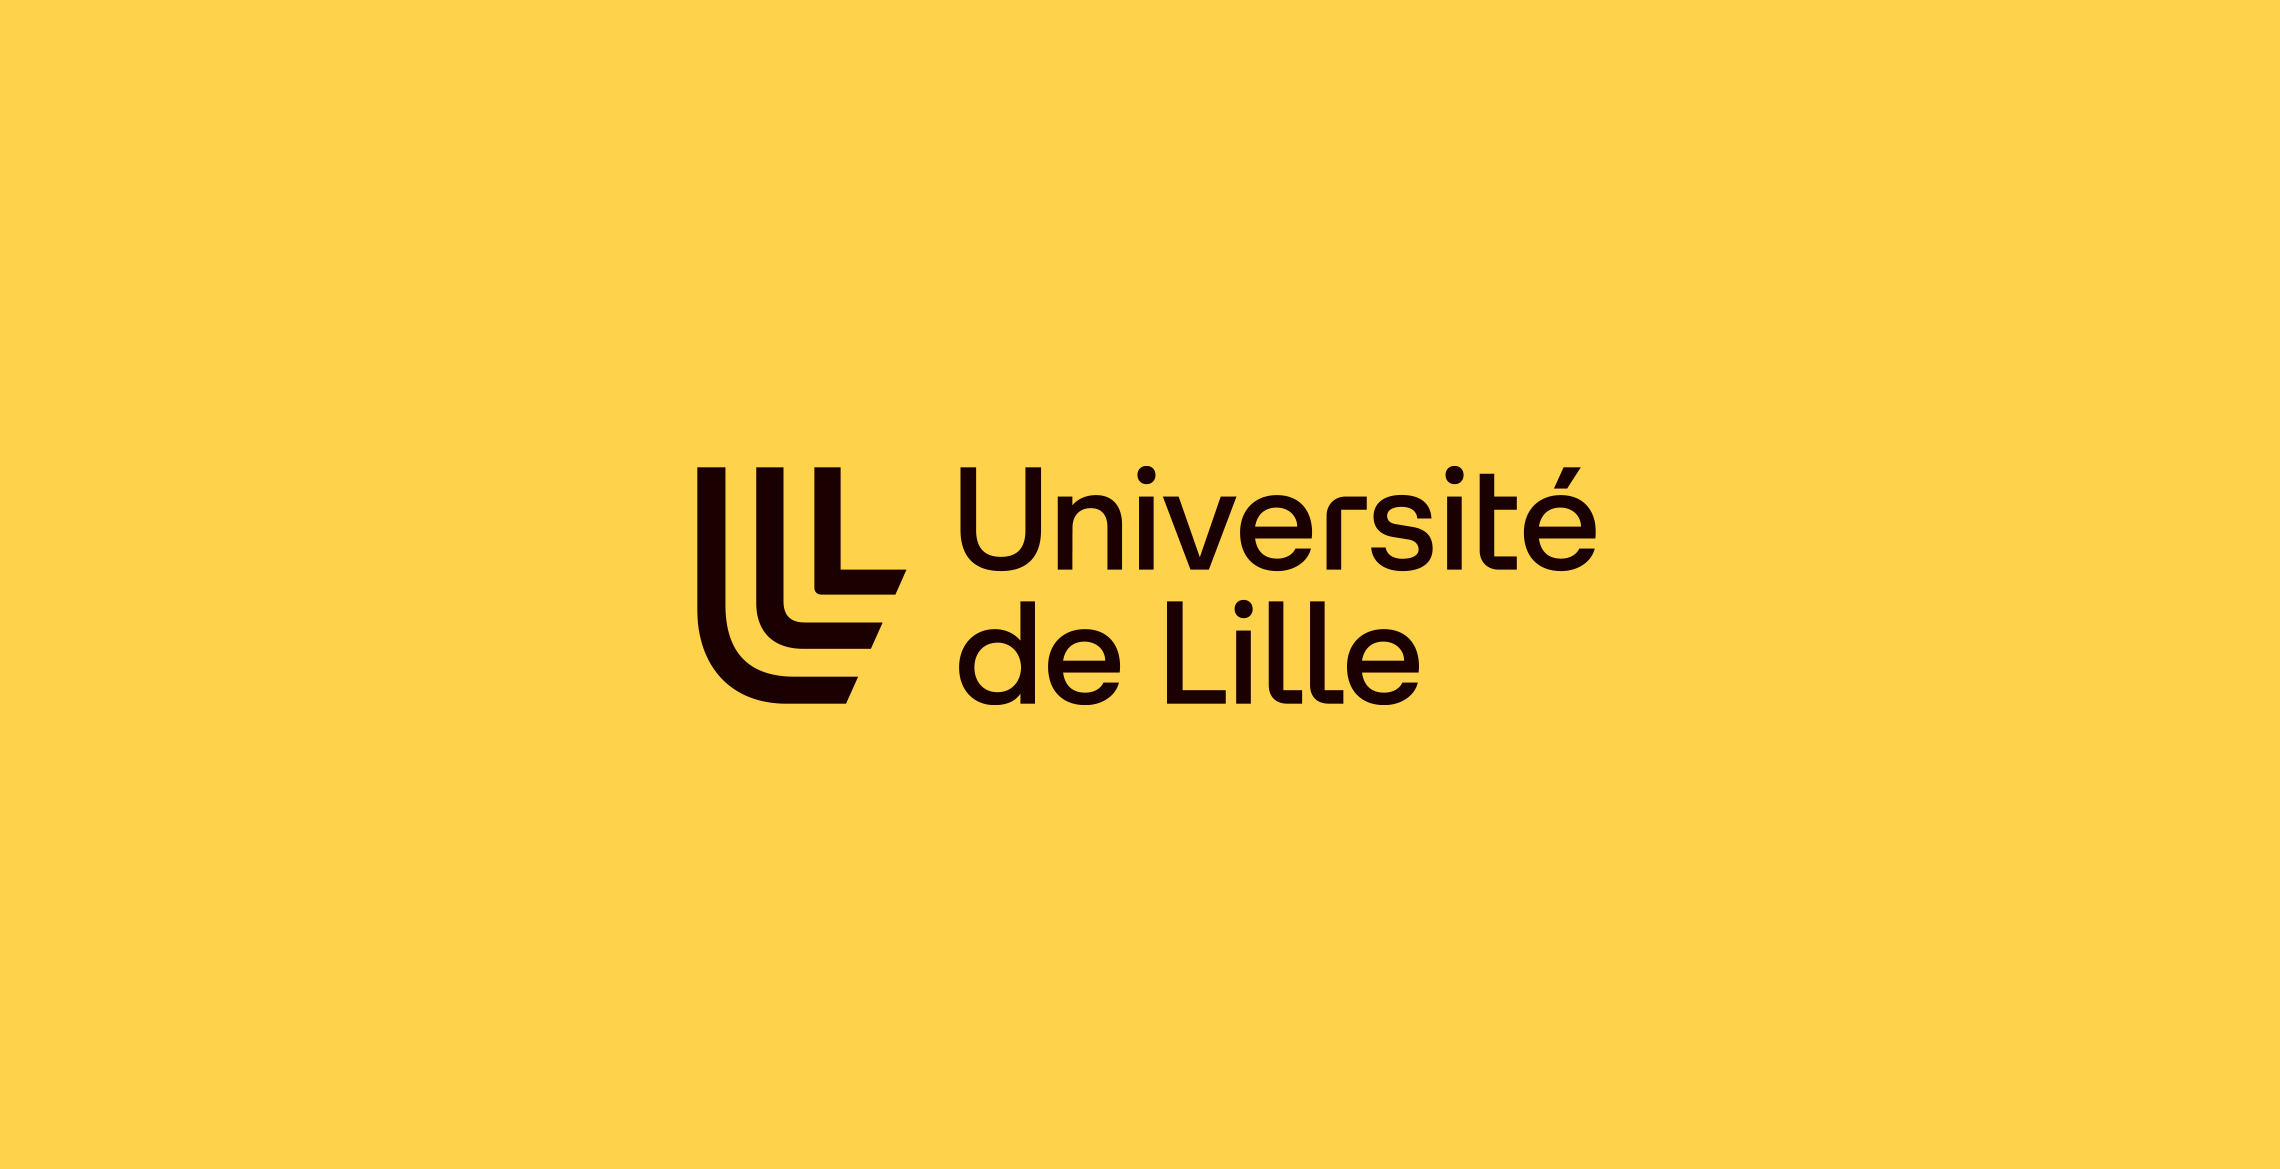 Universite-Lille-identite-visuelle-tetiere-ok